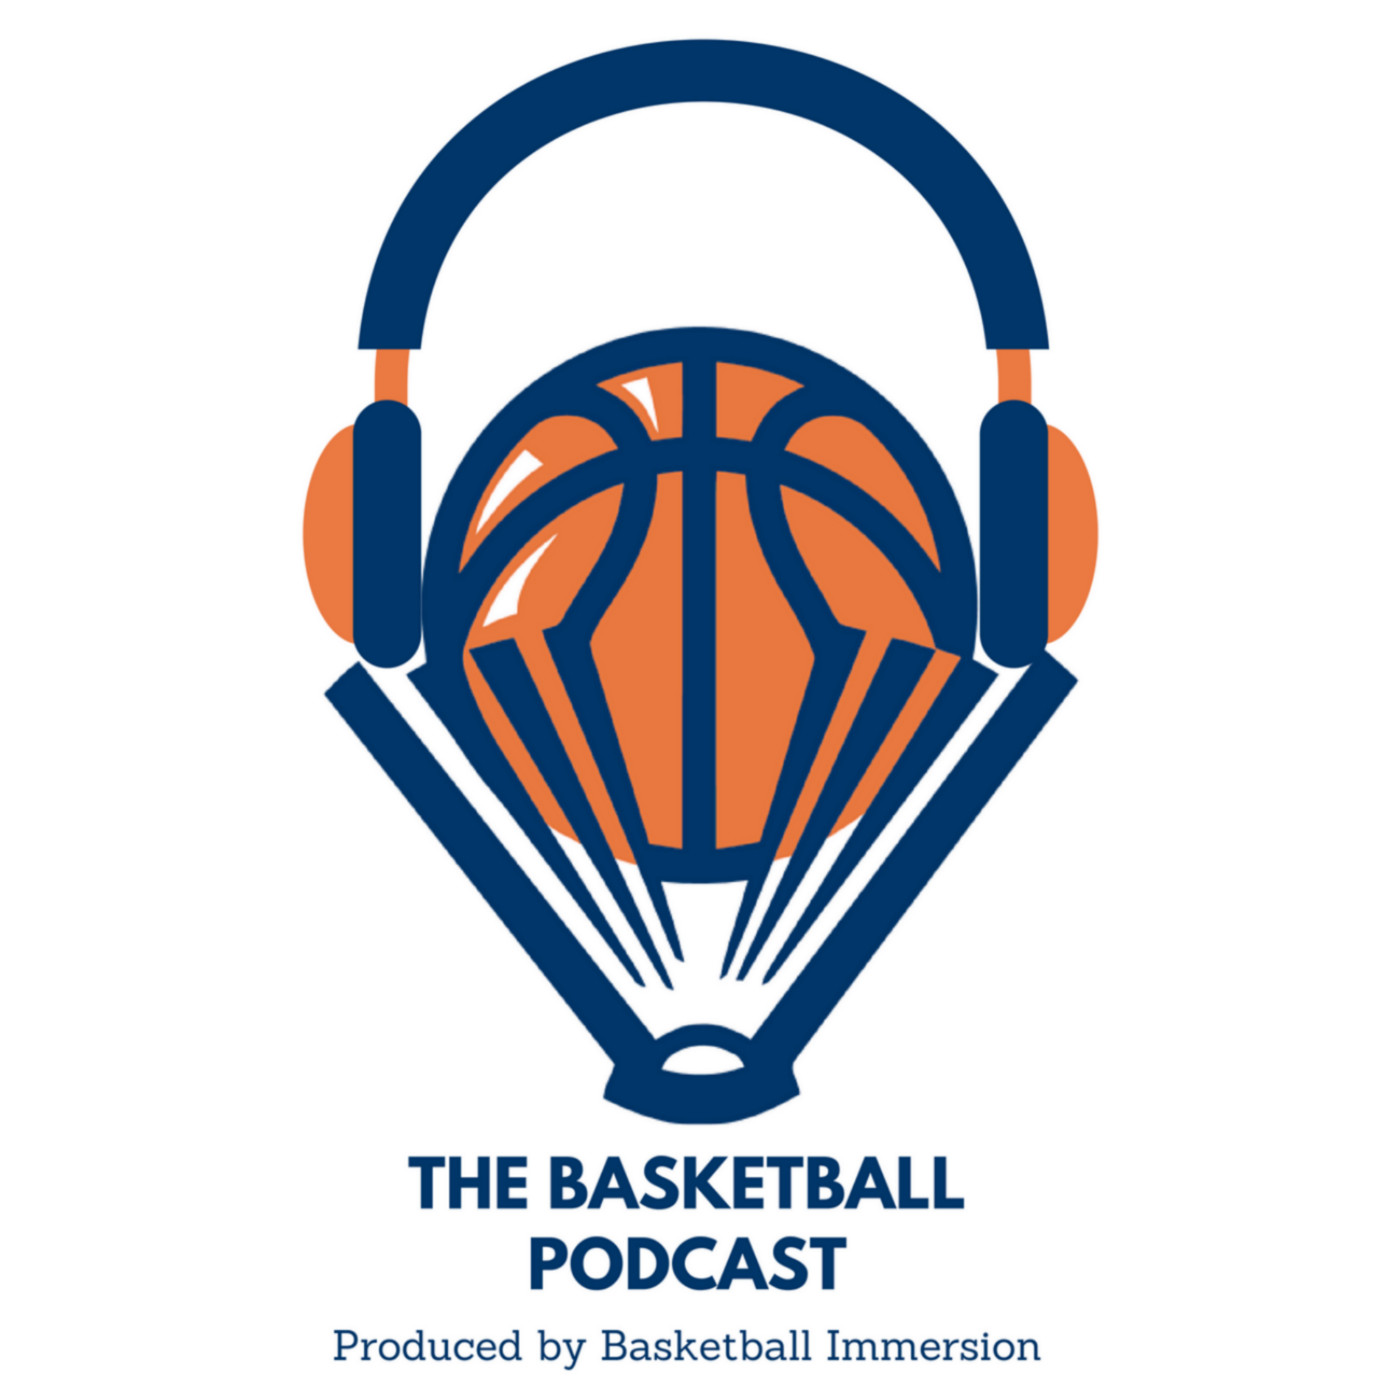 Artwork for podcast The Basketball Podcast